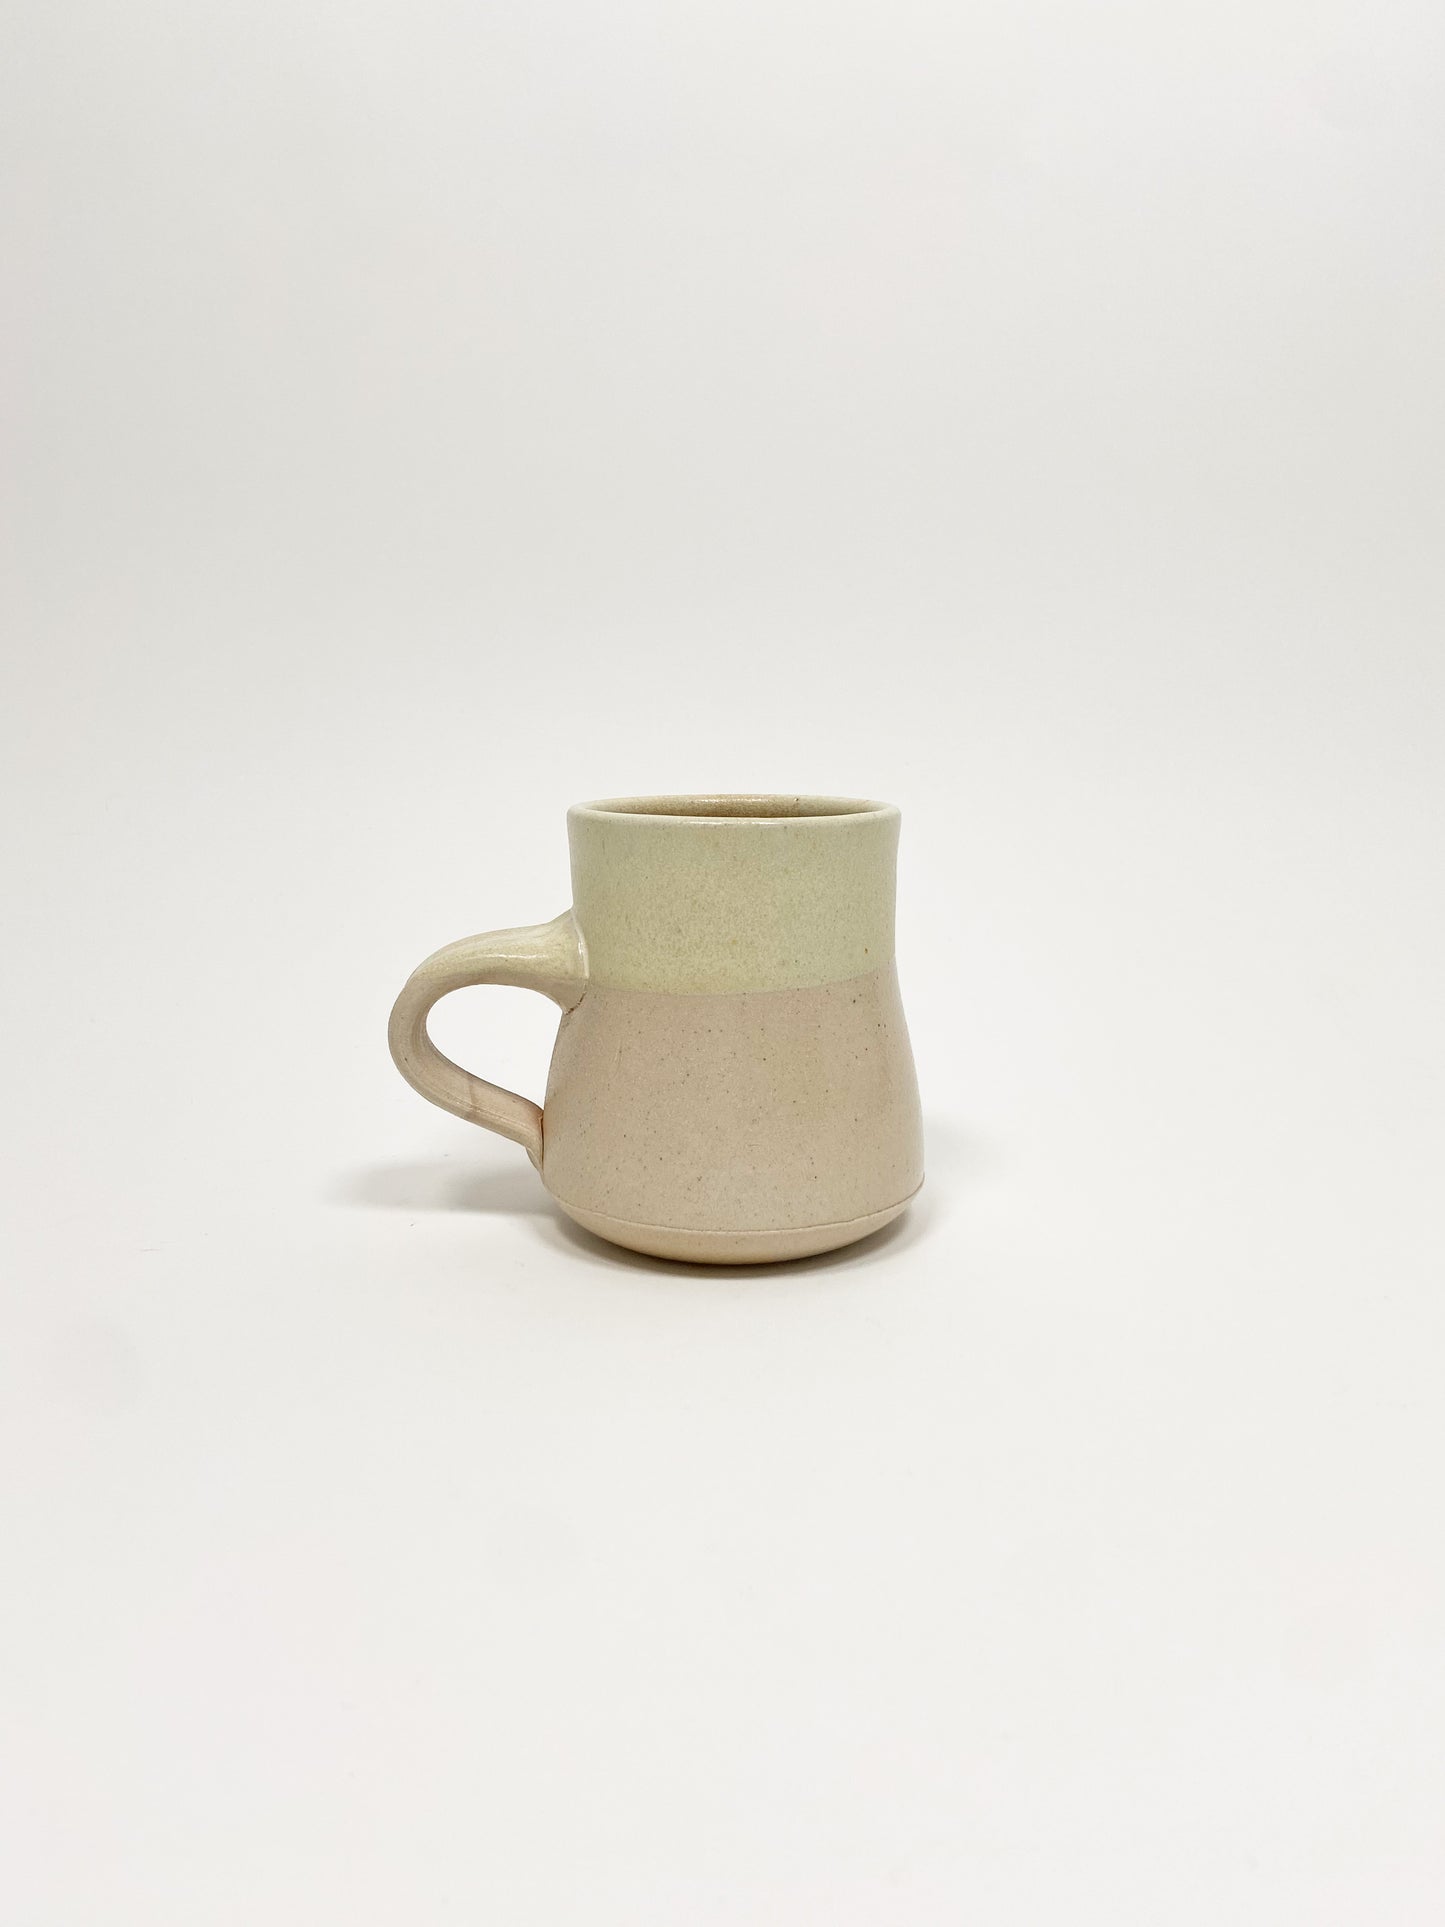 Handmade Mug Set